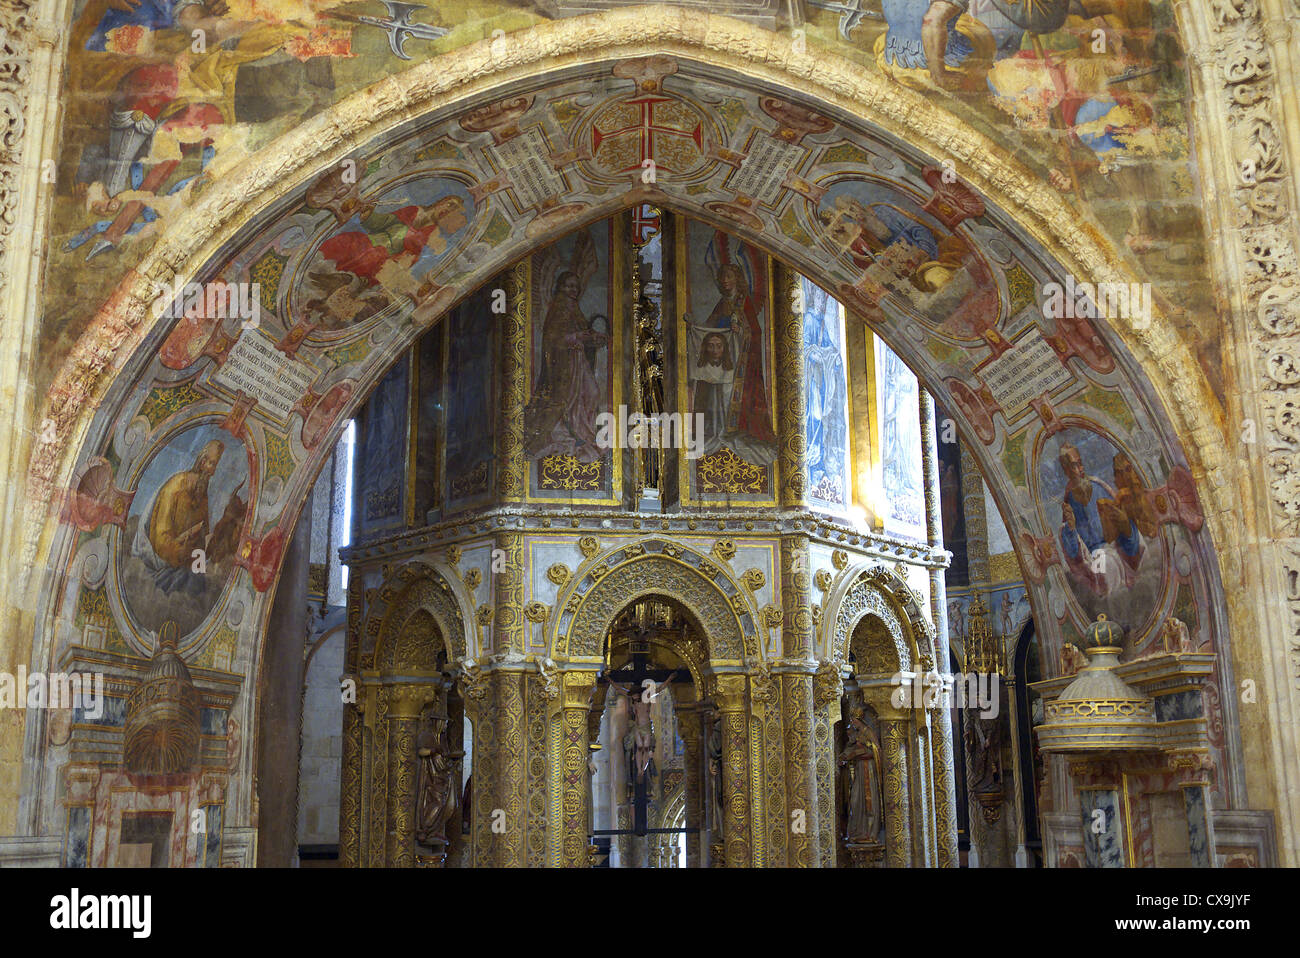 Frescoes inside the Convento de Cristo, Tomar, Portugal. Stock Photo